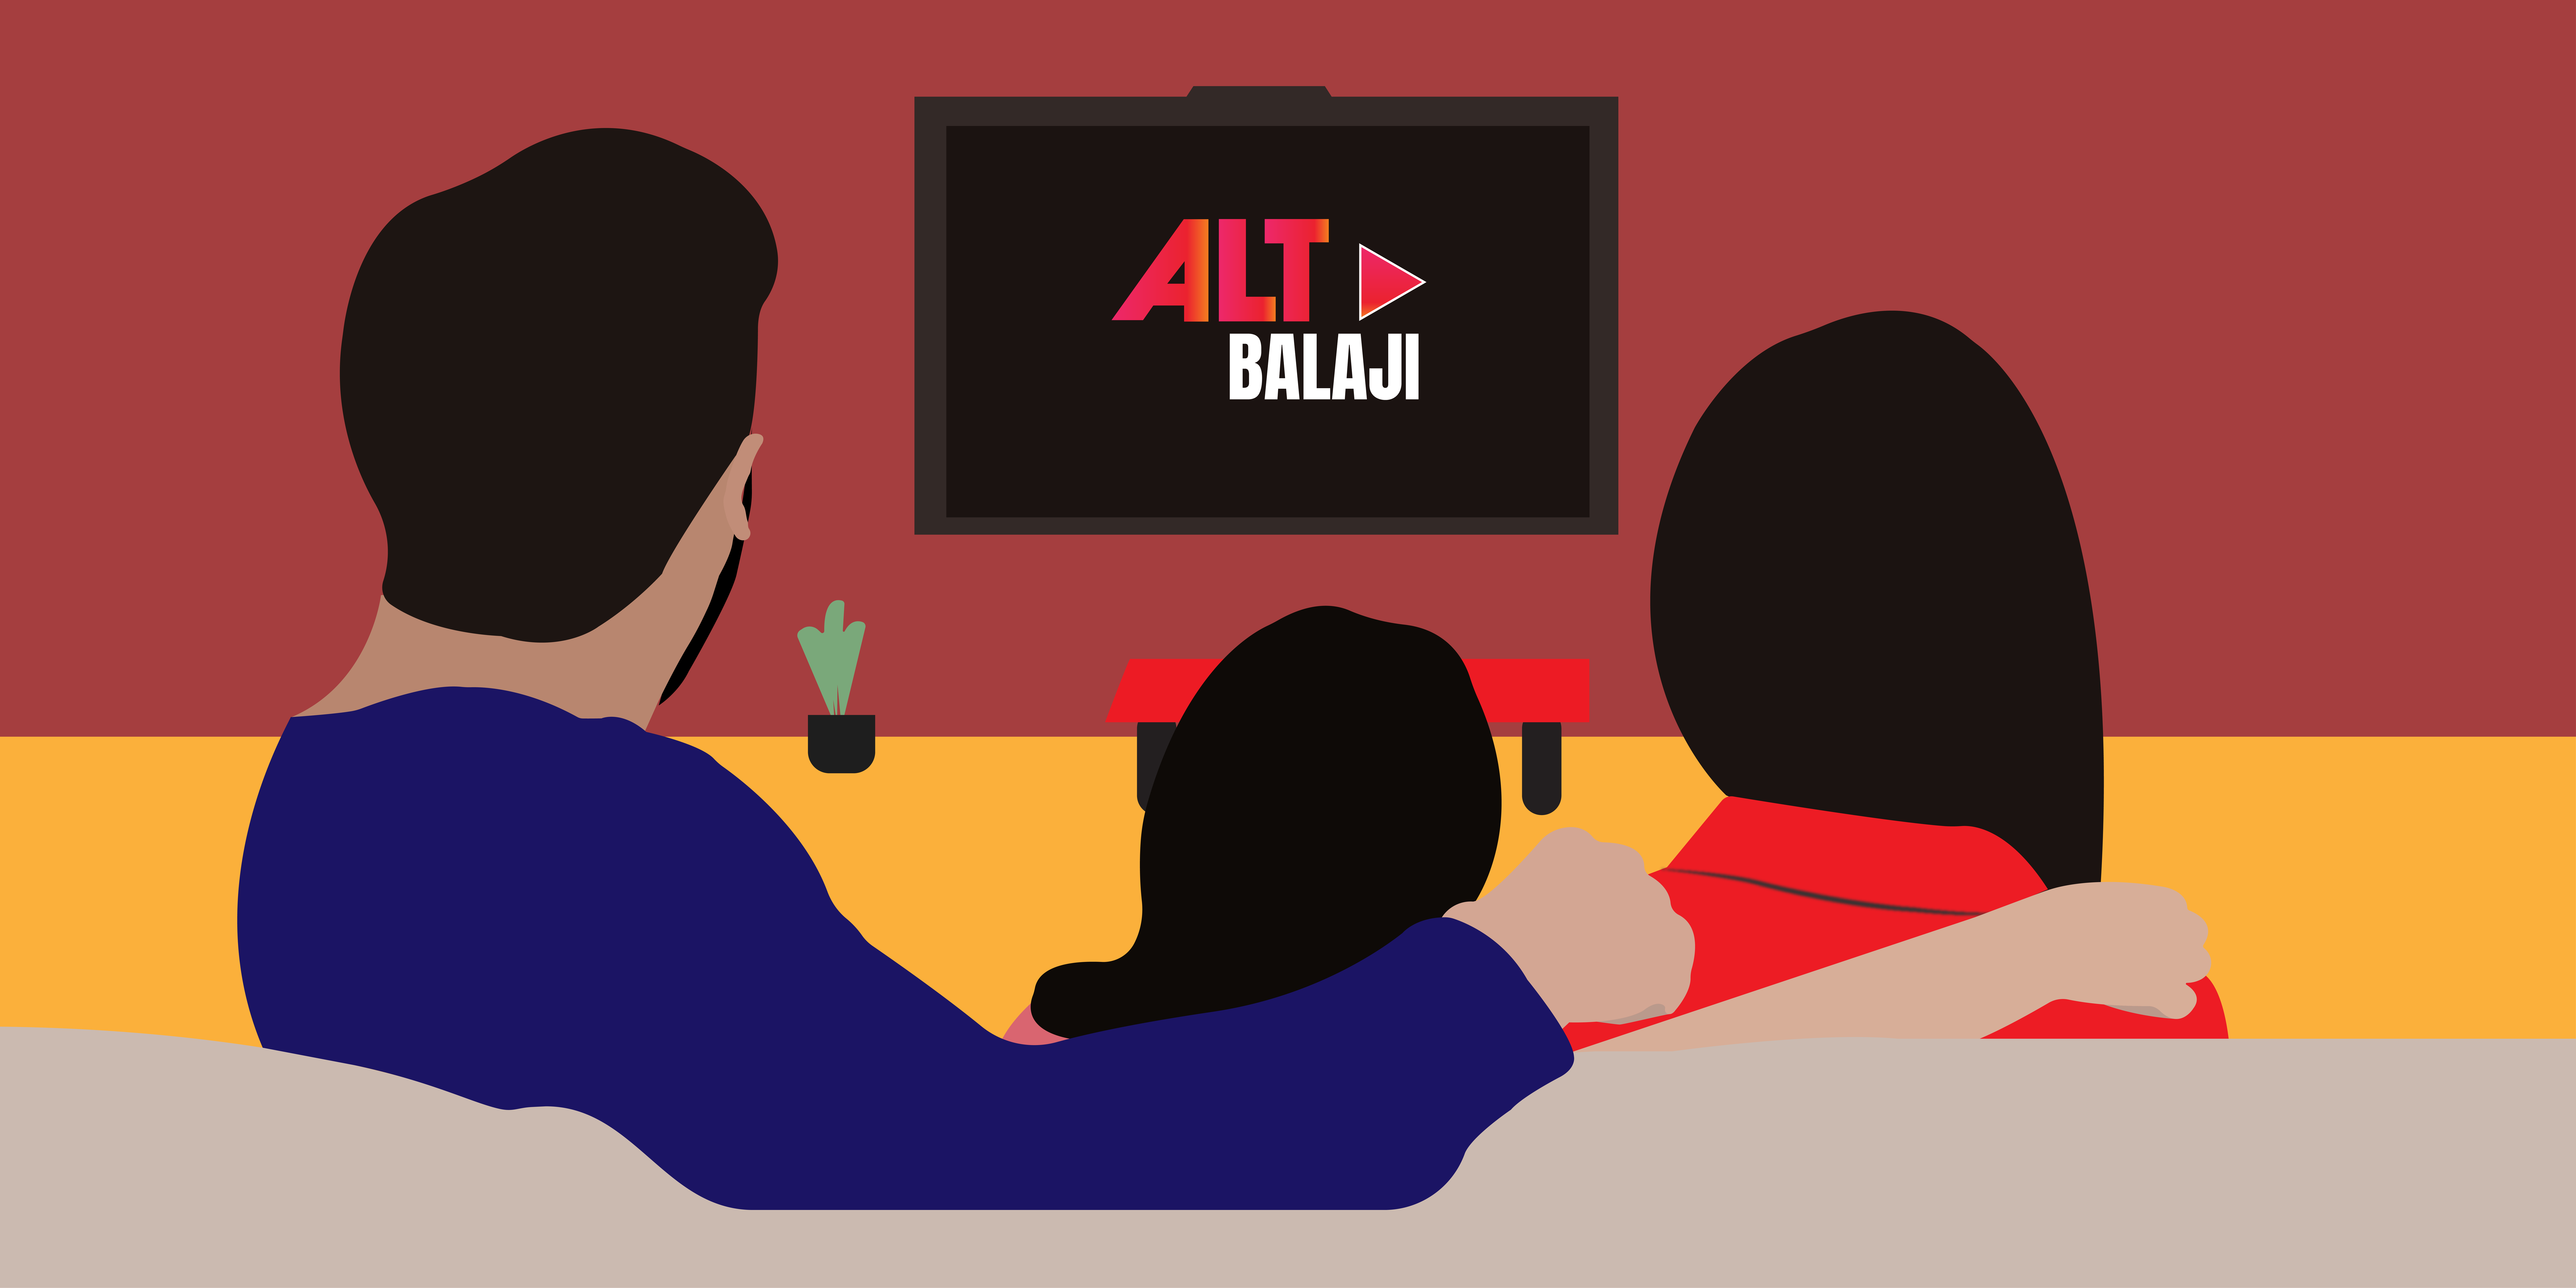 Alt balaji video platform illustration